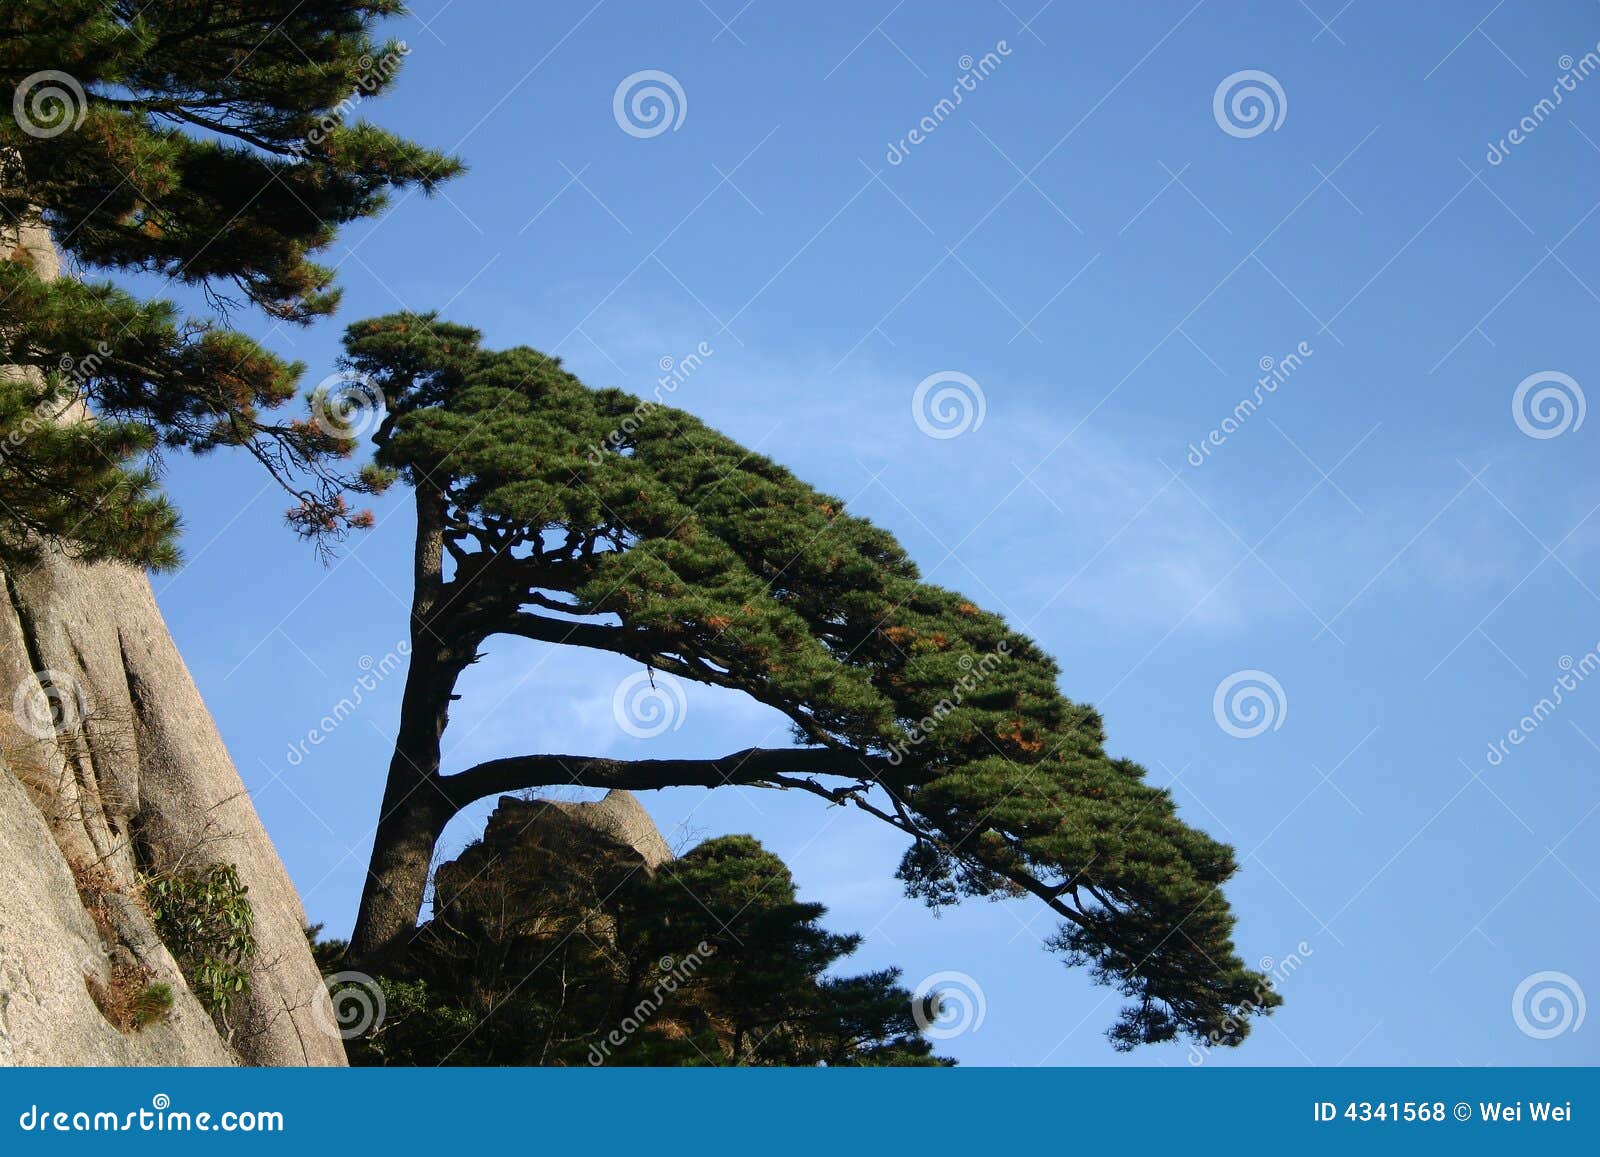 pine trees on mountainside